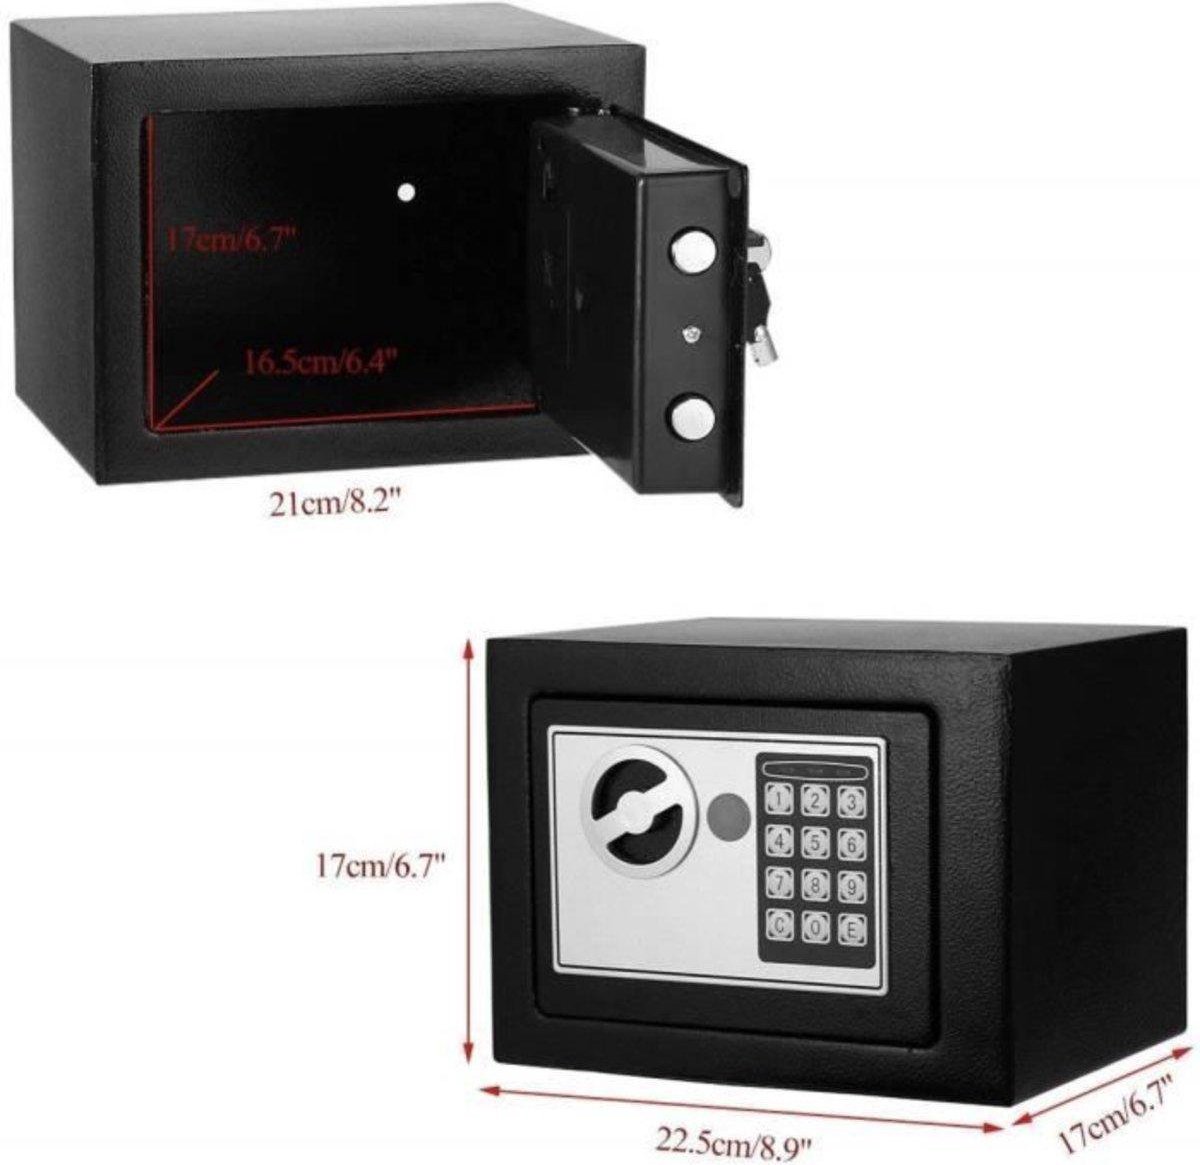 NOR-TEC Digital Safety box - Digitale kluis - kluis elektronisch - digitale kluis met sleutelslot - geldkist cijferslot